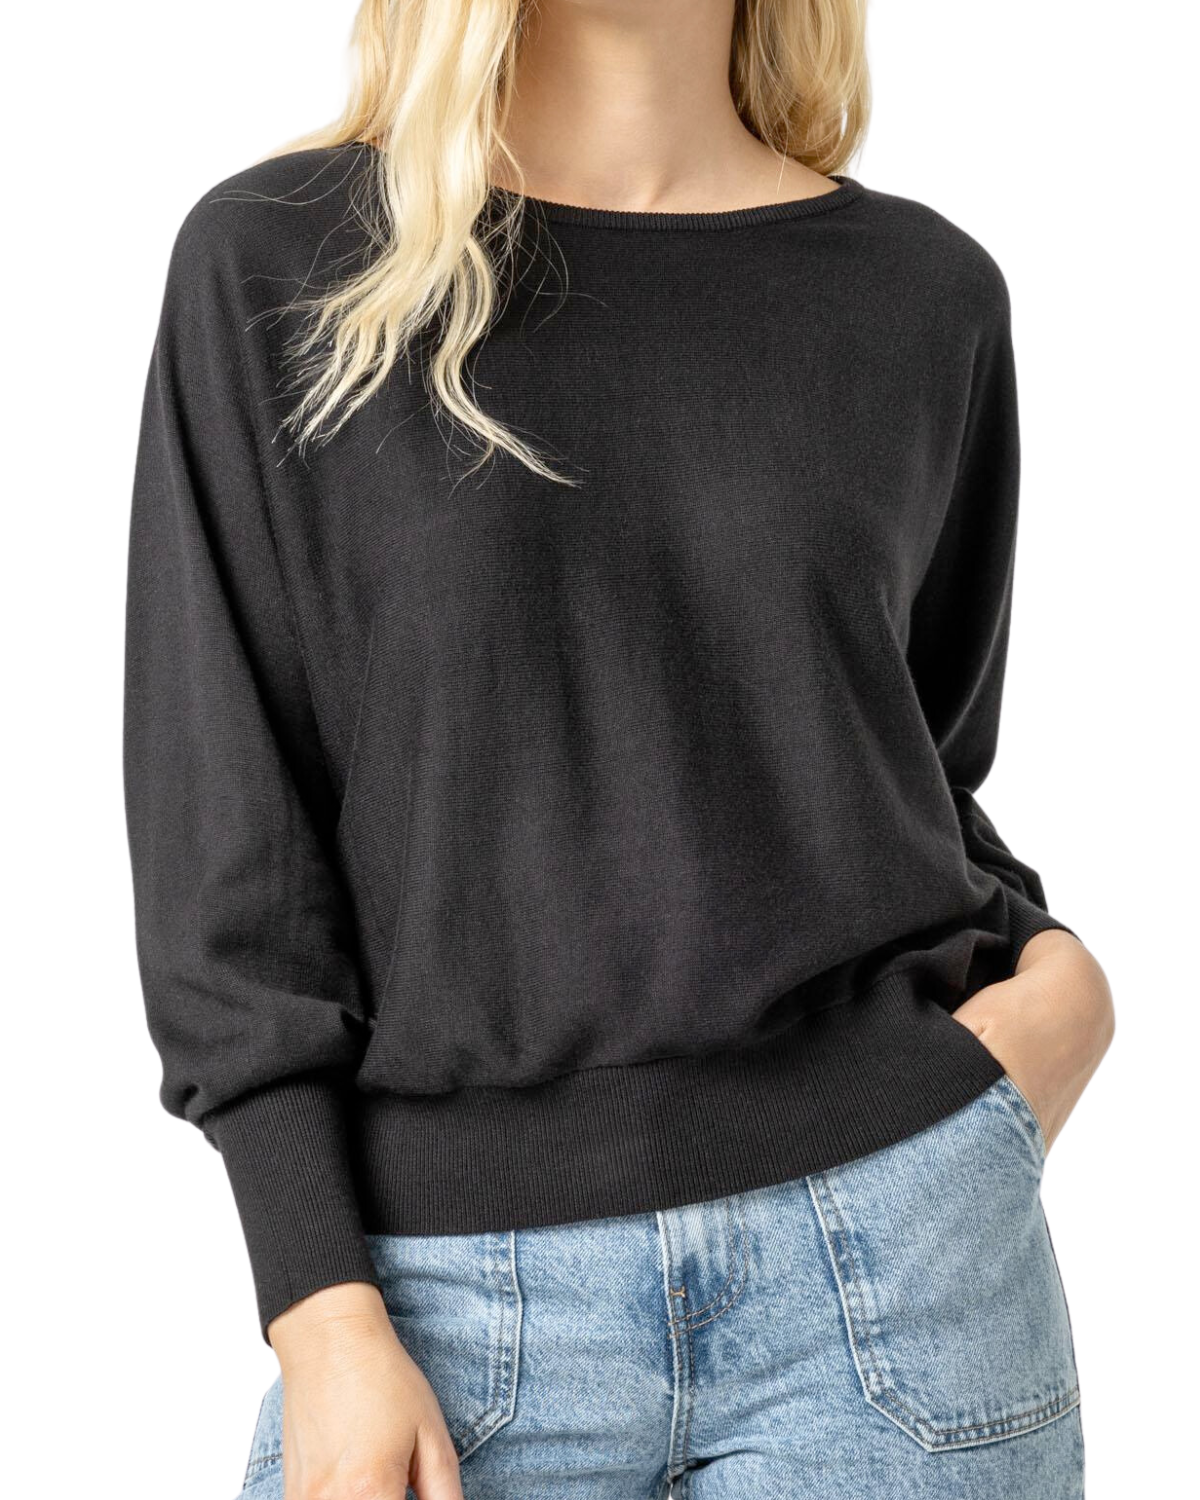 Boatneck Dolman Sweater (Black)